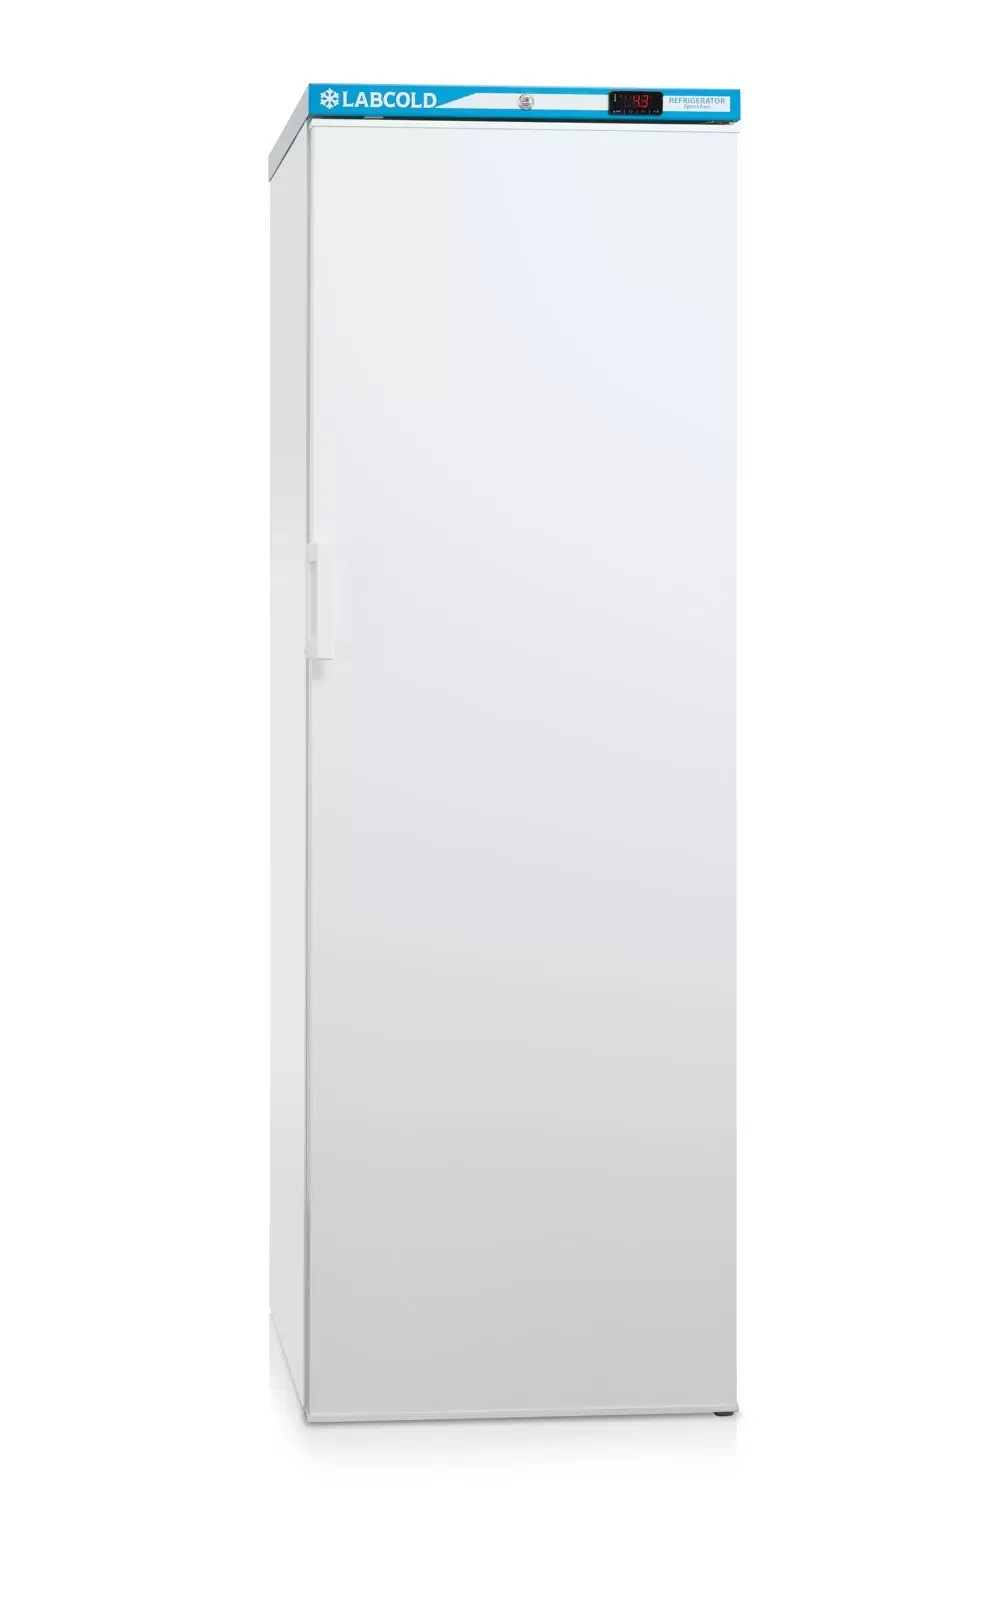 Labcold RLPR1517 SparkFree Free Standing Laboratory Refrigerator, 0°C to 10°C Temperature Range, 439 Litres Capacity